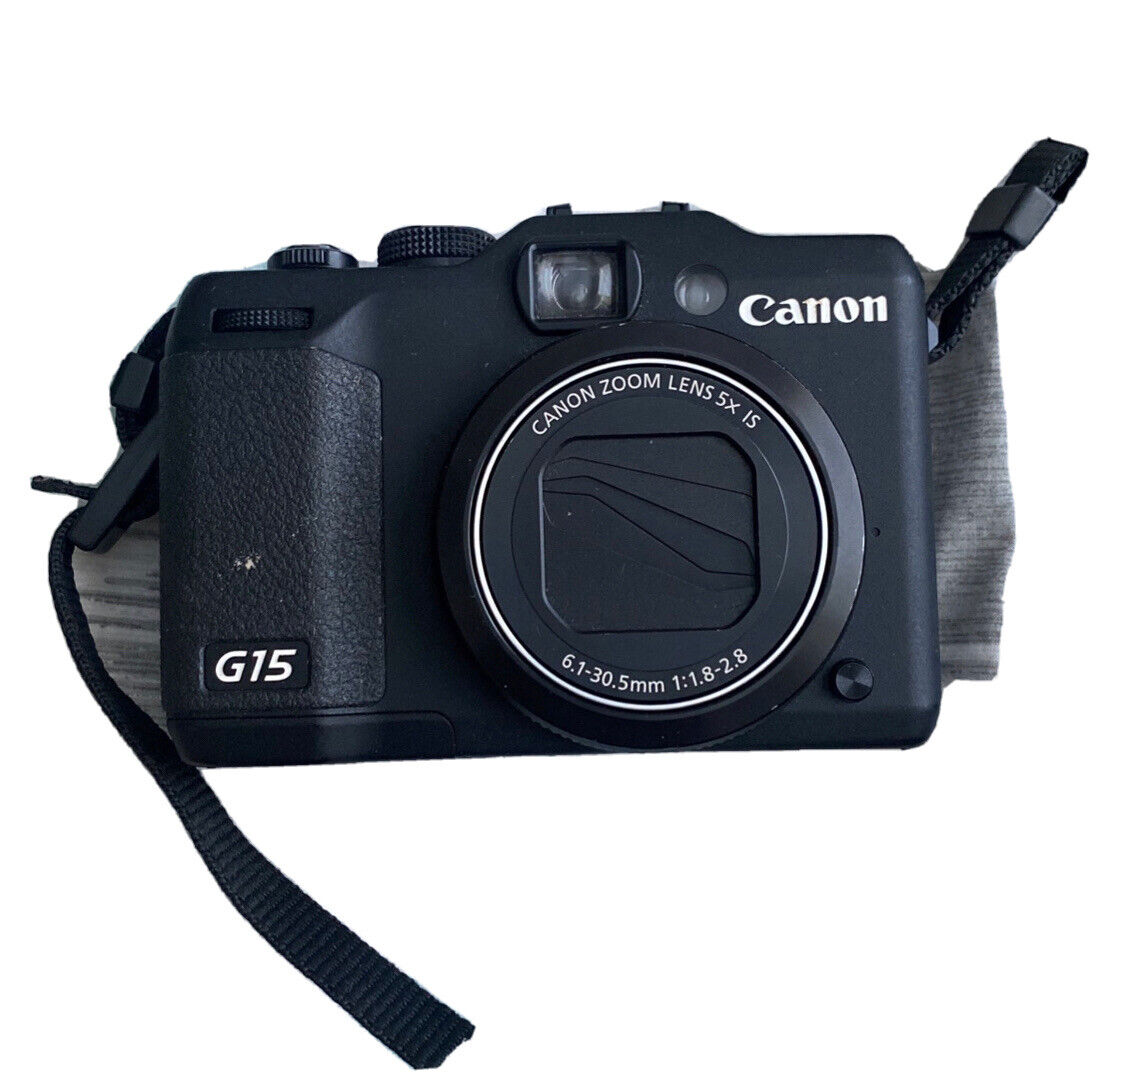 Canon PowerShot G15 12.1MP Digital Camera - Black for sale online 